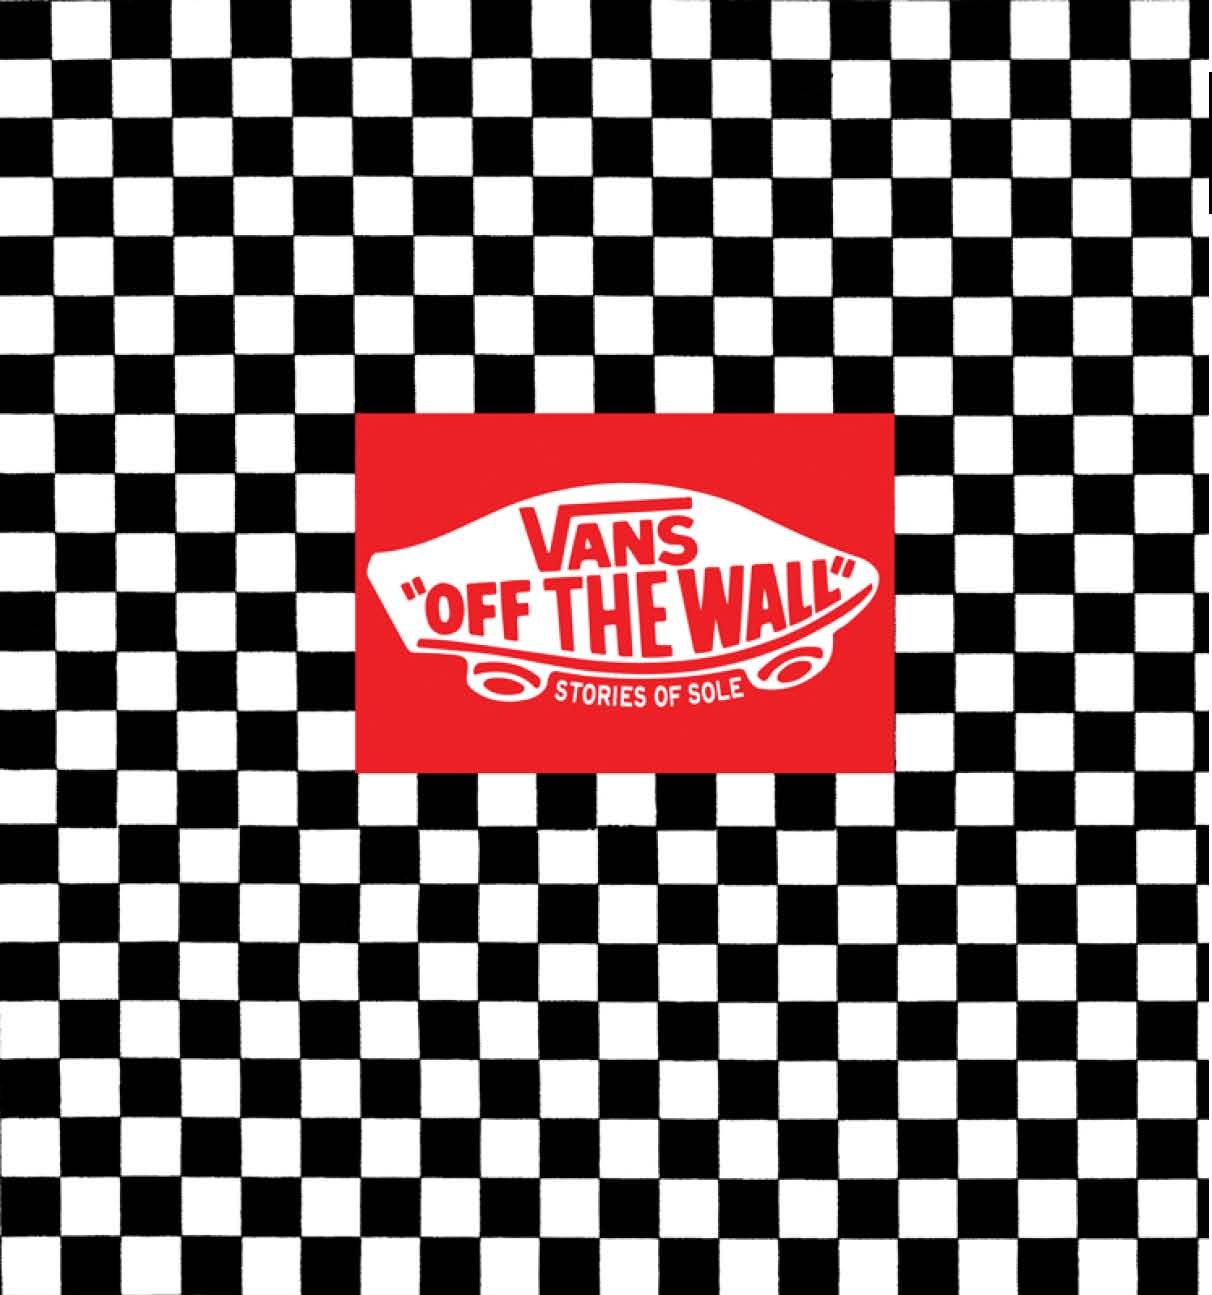 Vans Off The Wall - HD Wallpaper 